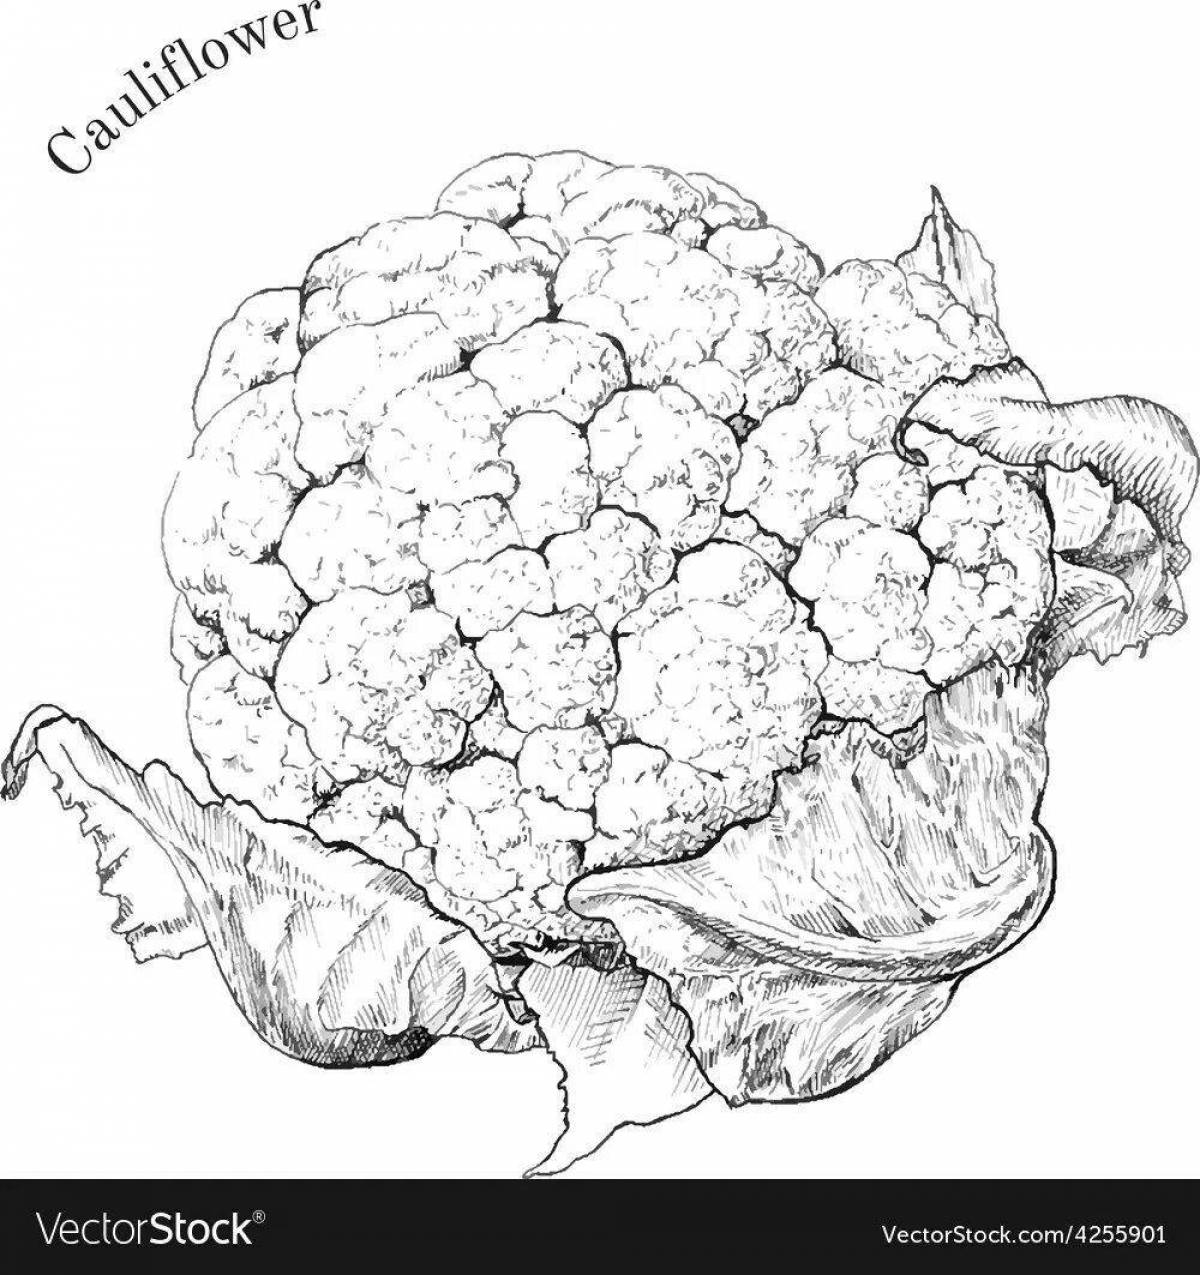 Coloring page wonderful cauliflower